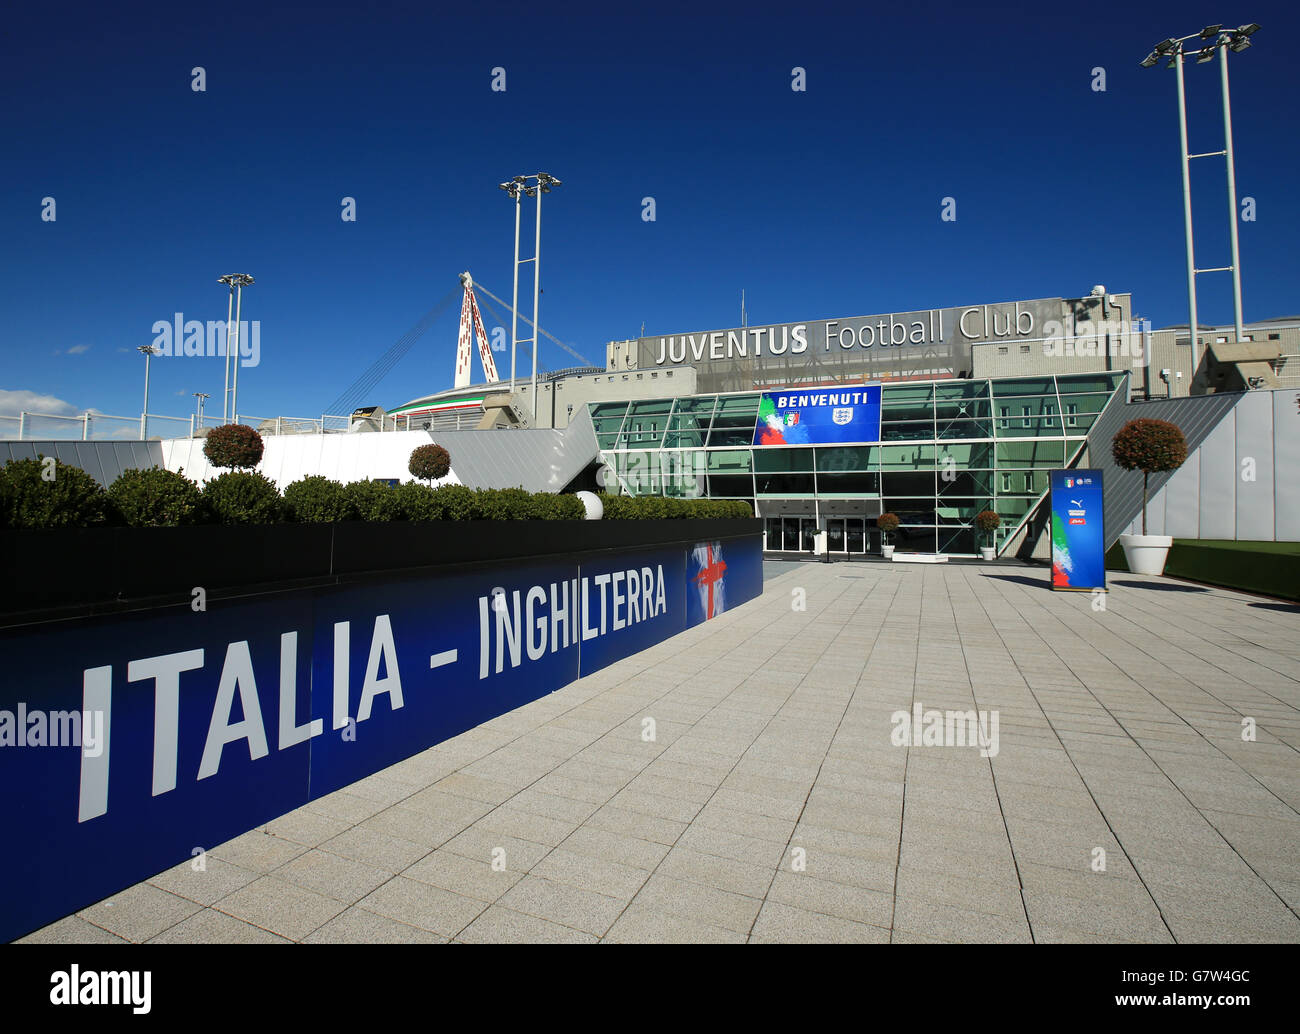 Calcio - Internazionale amichevole - Italia / Inghilterra - Juventus Stadium. Una visione generale dello Stadio Juventus, Torino, Italia. Foto Stock